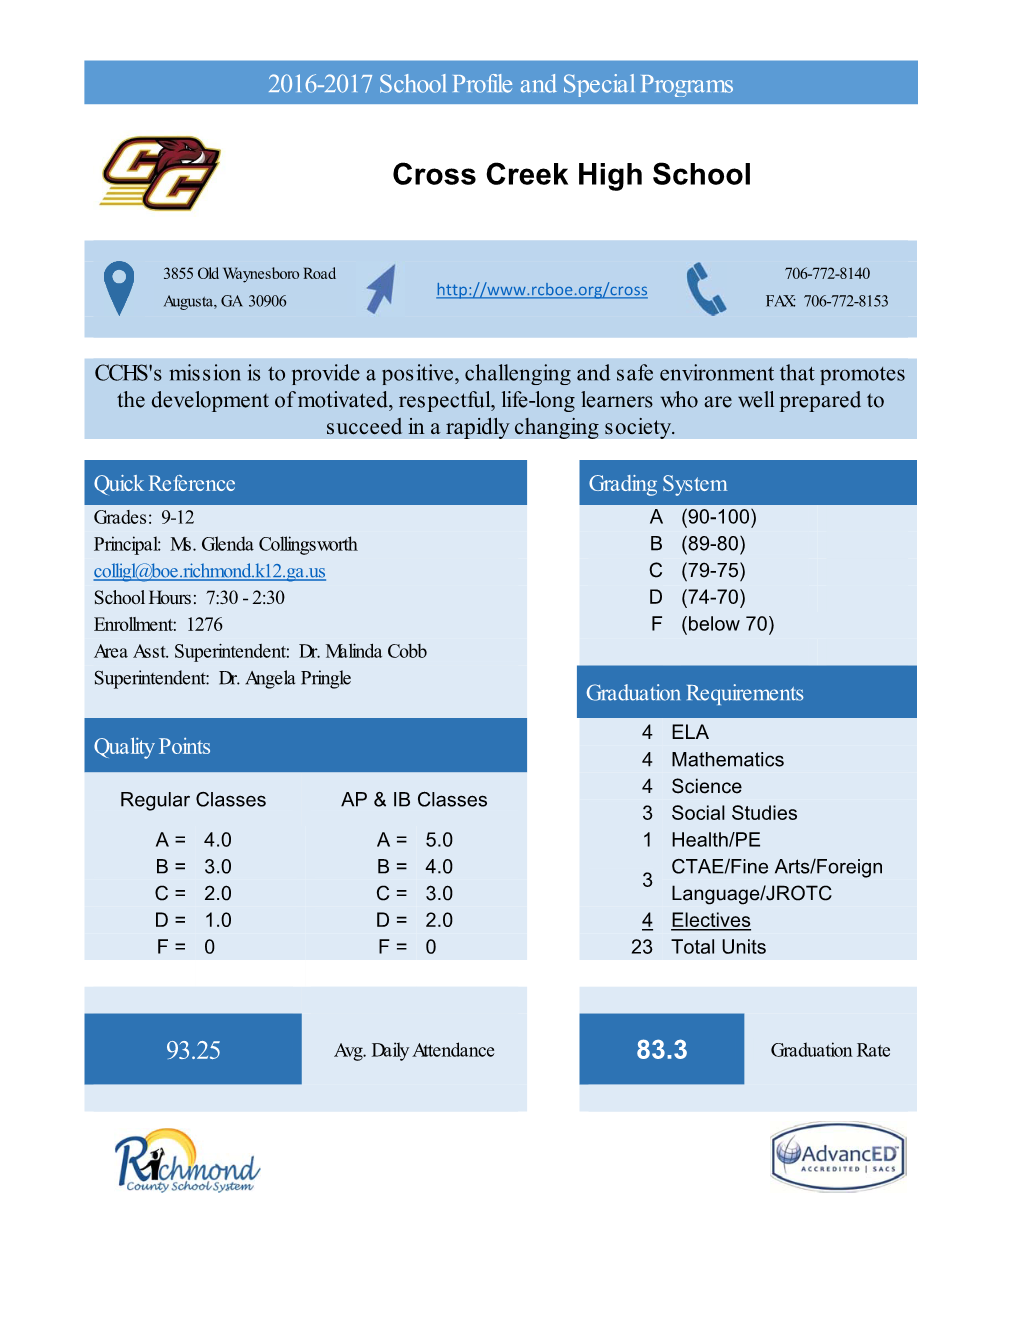 Cross Creek High School